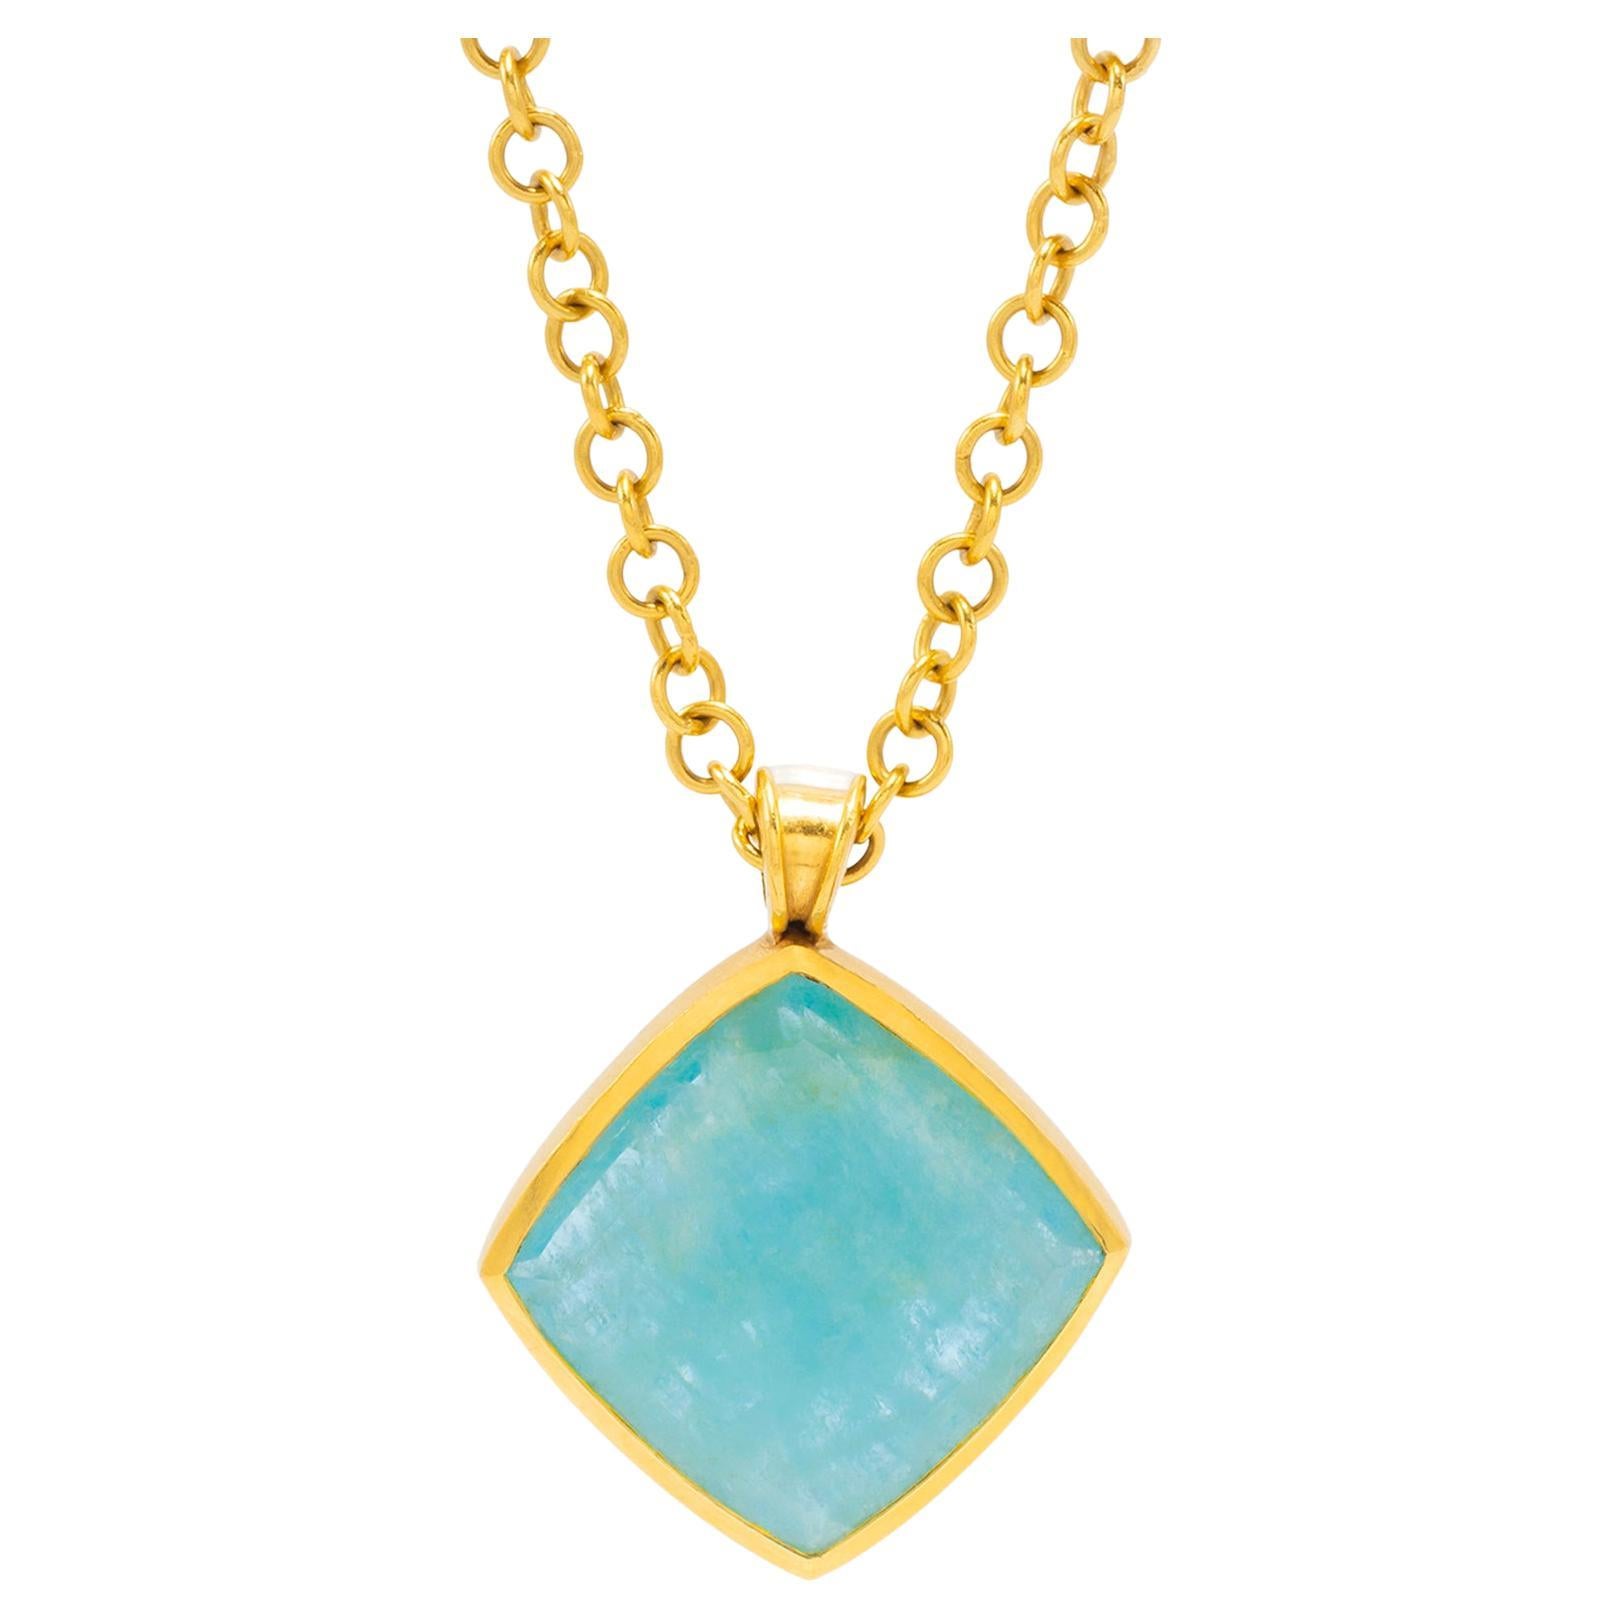 22k Gold Aqua Pendant Necklace, by Tagili For Sale